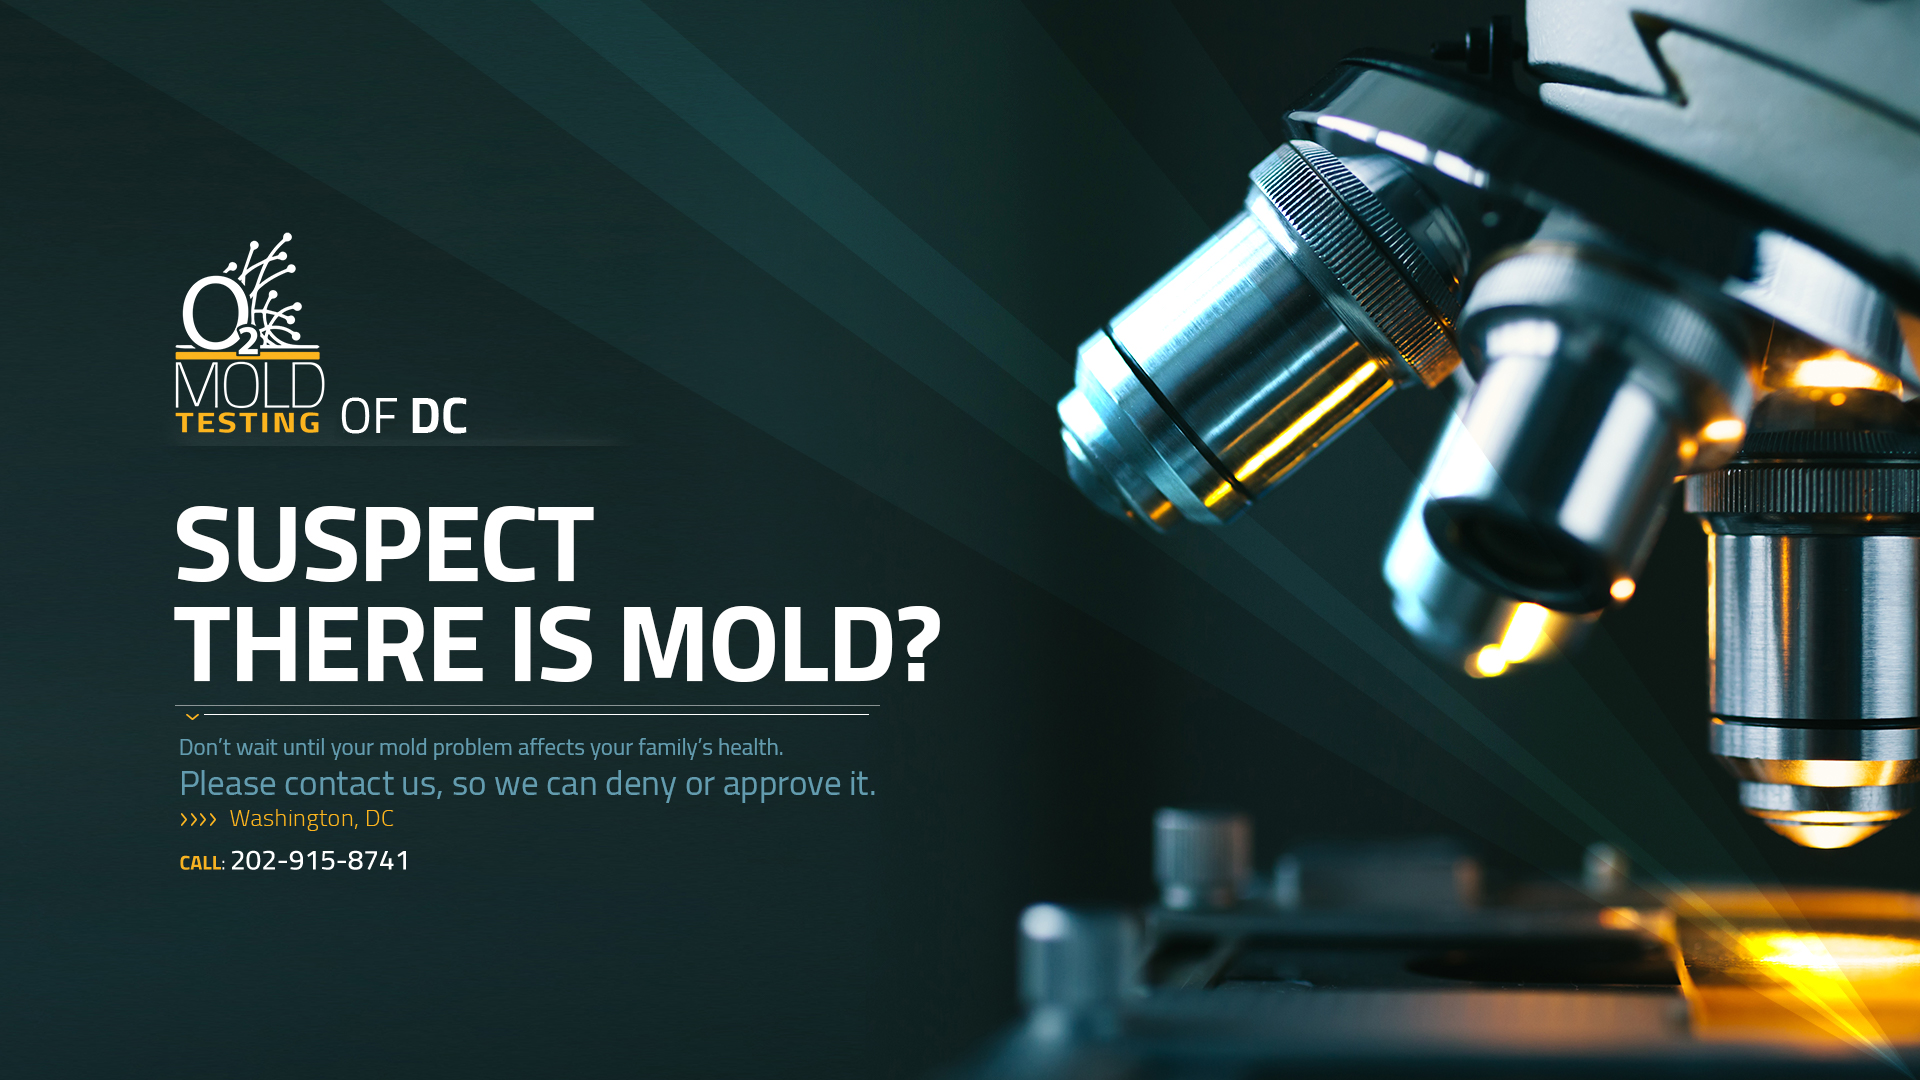 O2 Mold Testing of DC